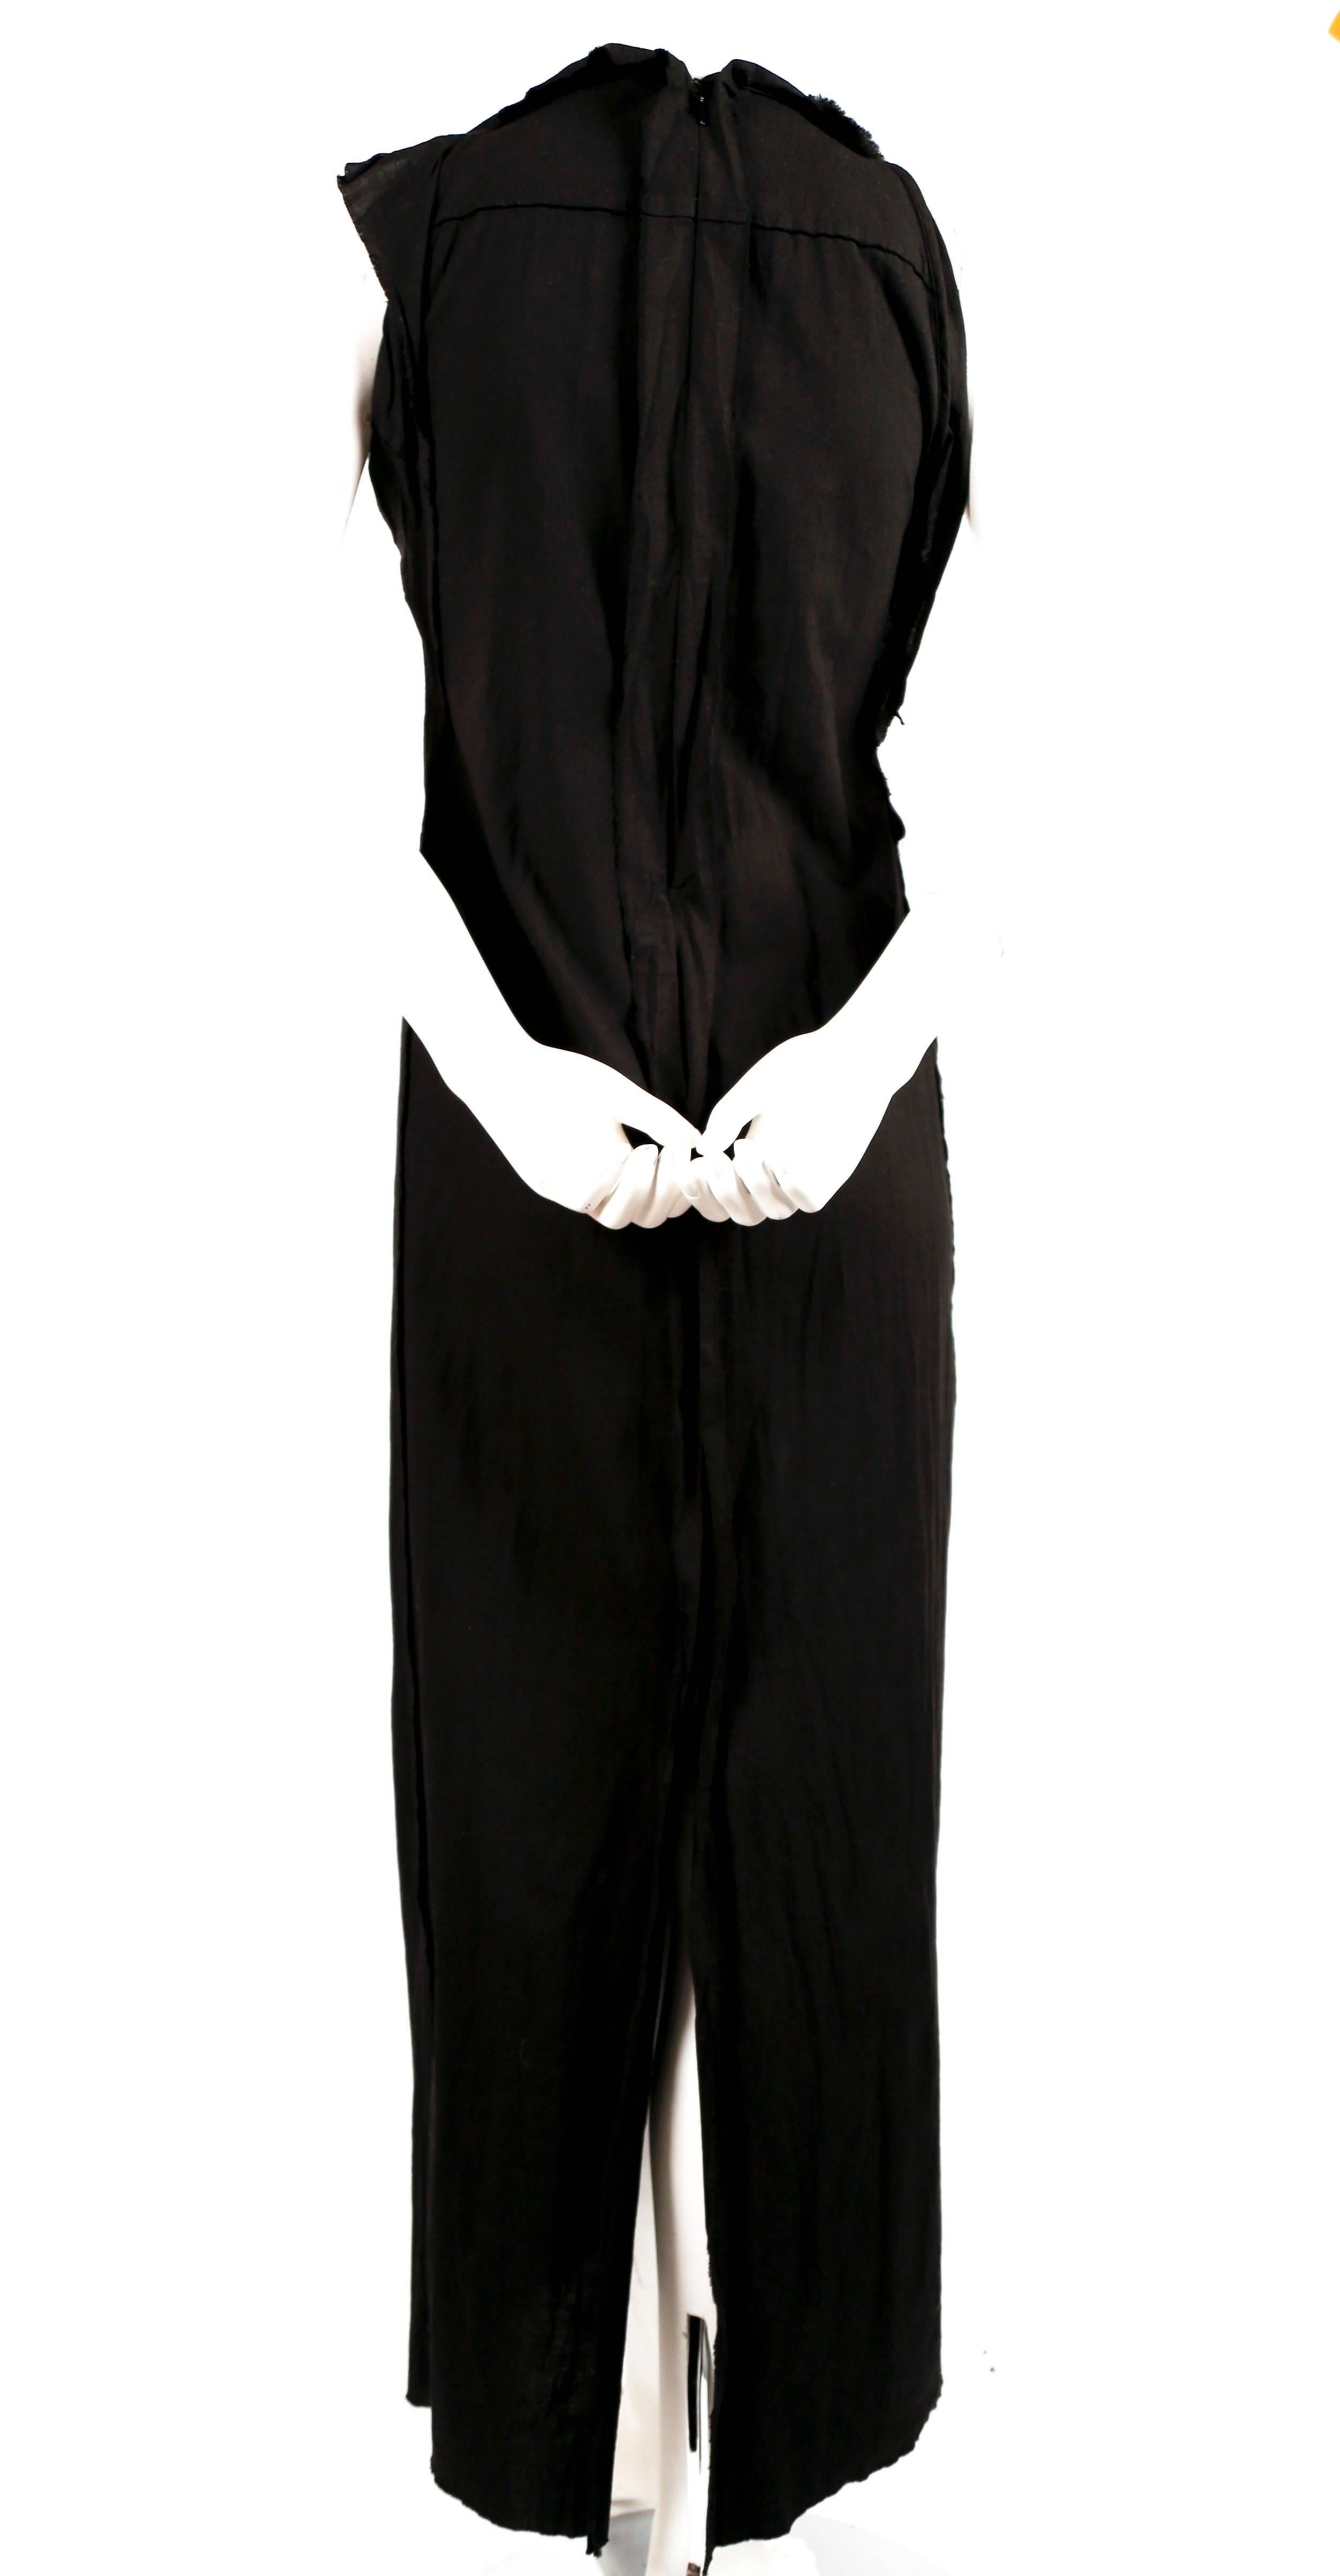 Women's or Men's 2005 JUNYA WATANABE black runway dress with layered 'zipper' trim